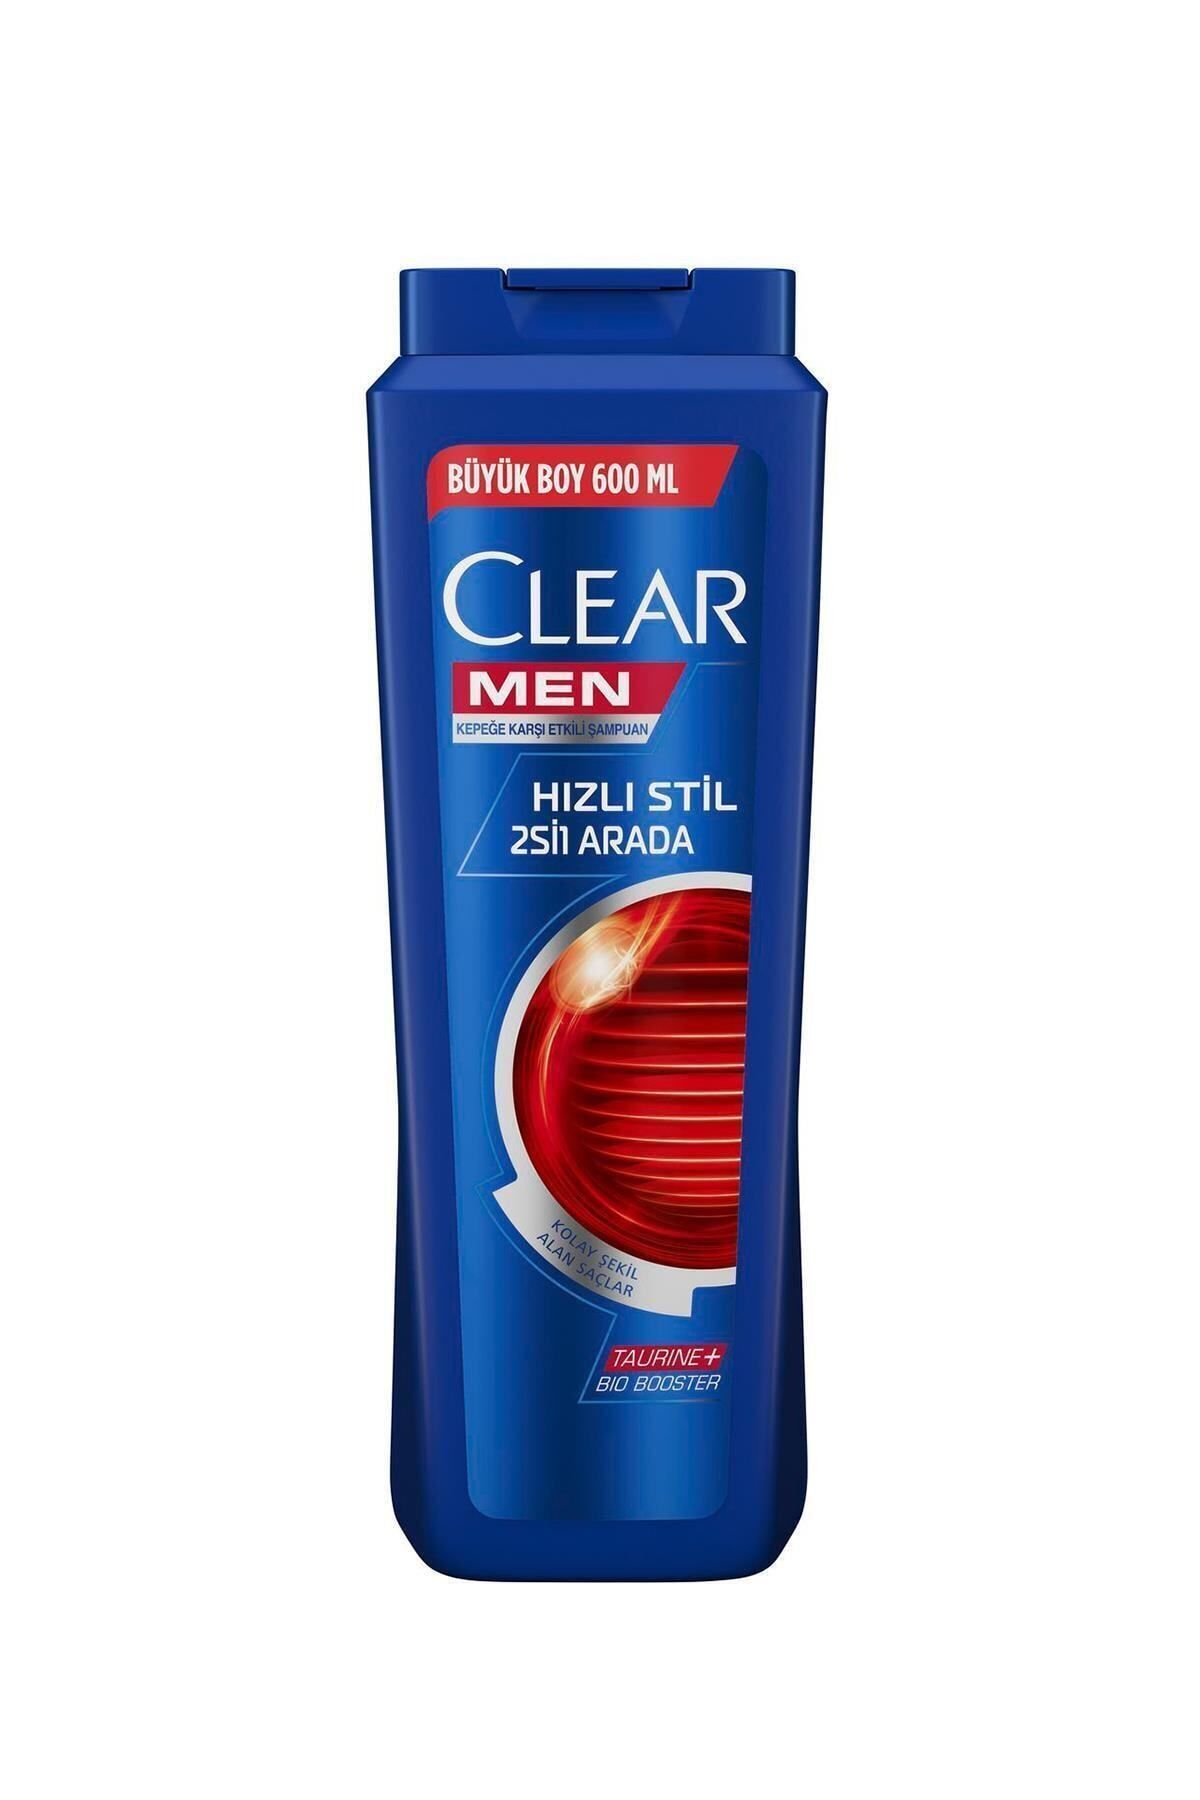 Clear Men Hızlı Stil 2si1 Arada Şampuan 600 ml